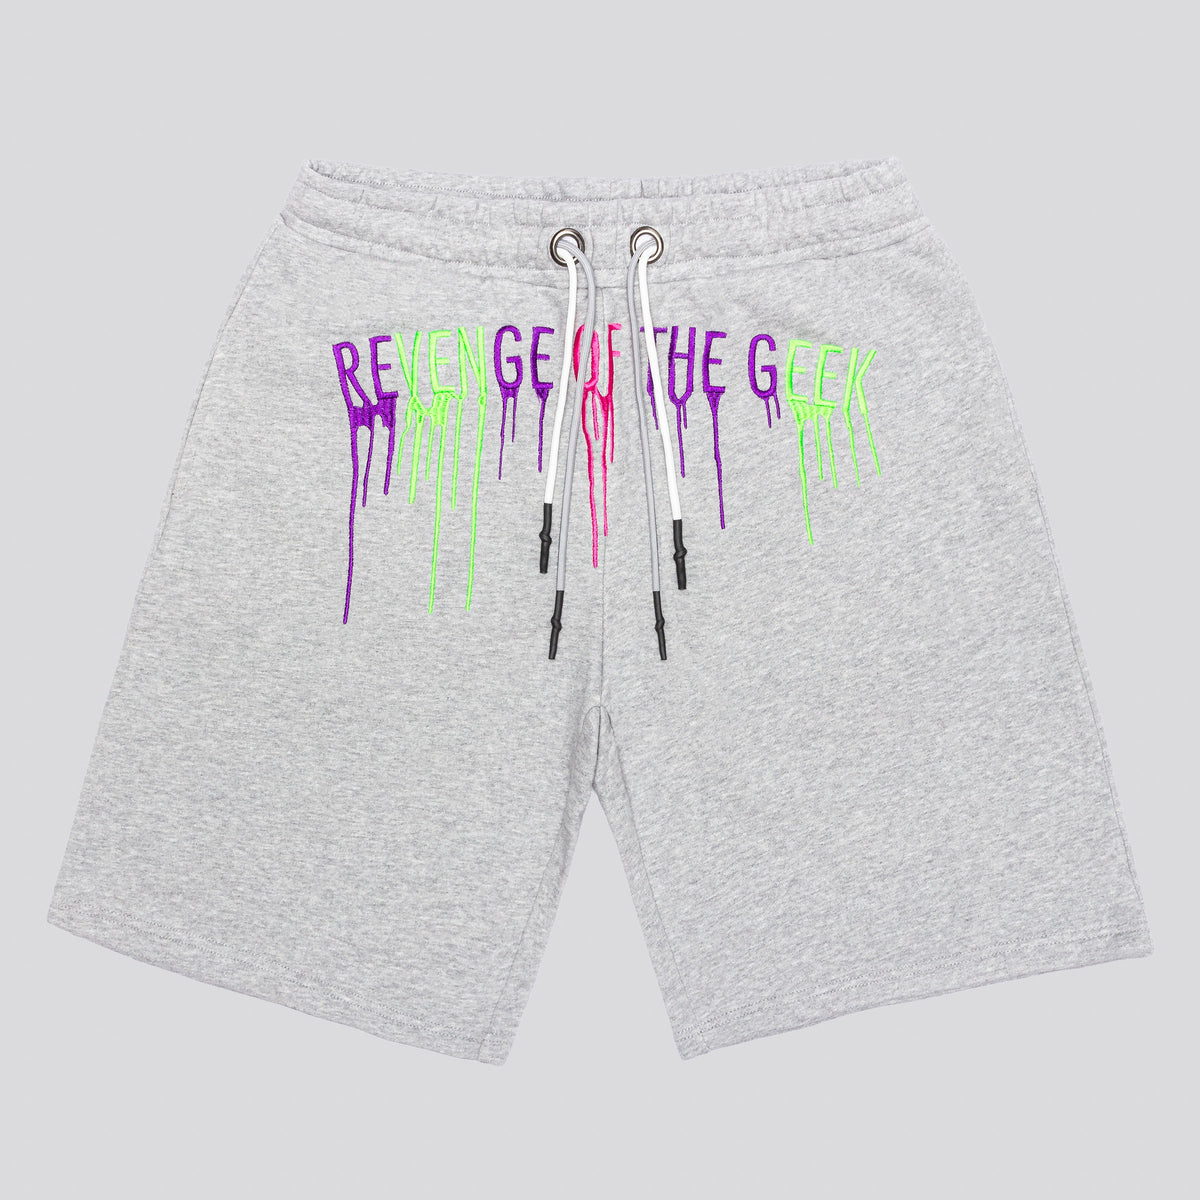 Revenge of the Geek | Grey Graffiti Drip Sweat Shorts